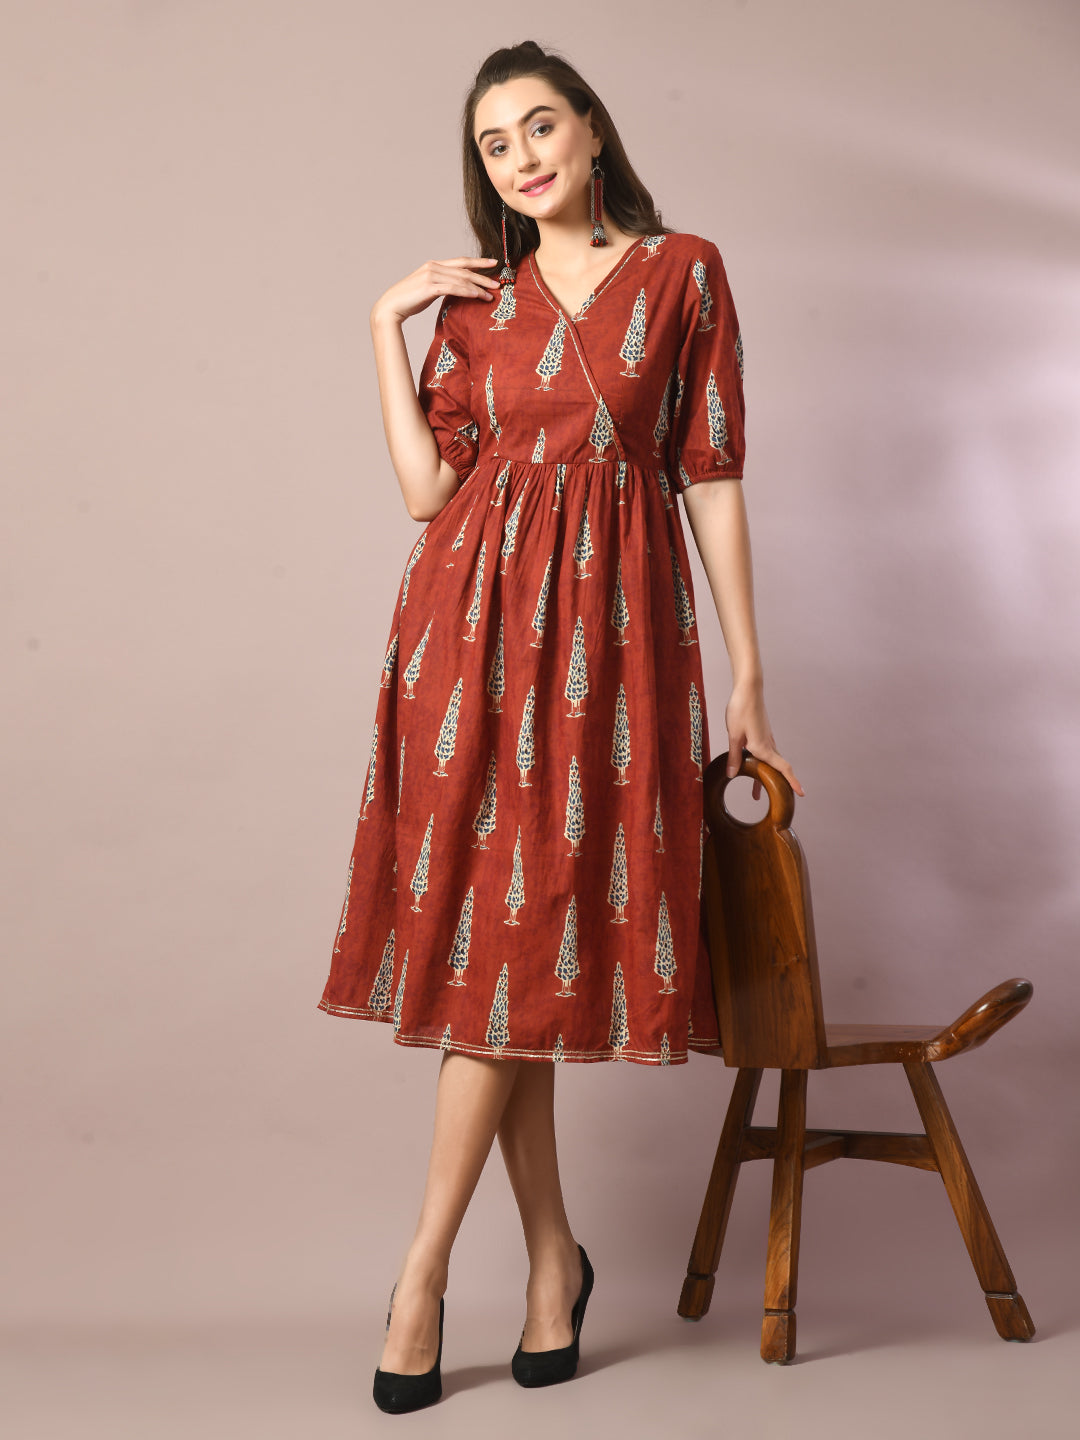 Women's  Rust Printed Cotton V-Neck Empire Party Dress  - Myshka